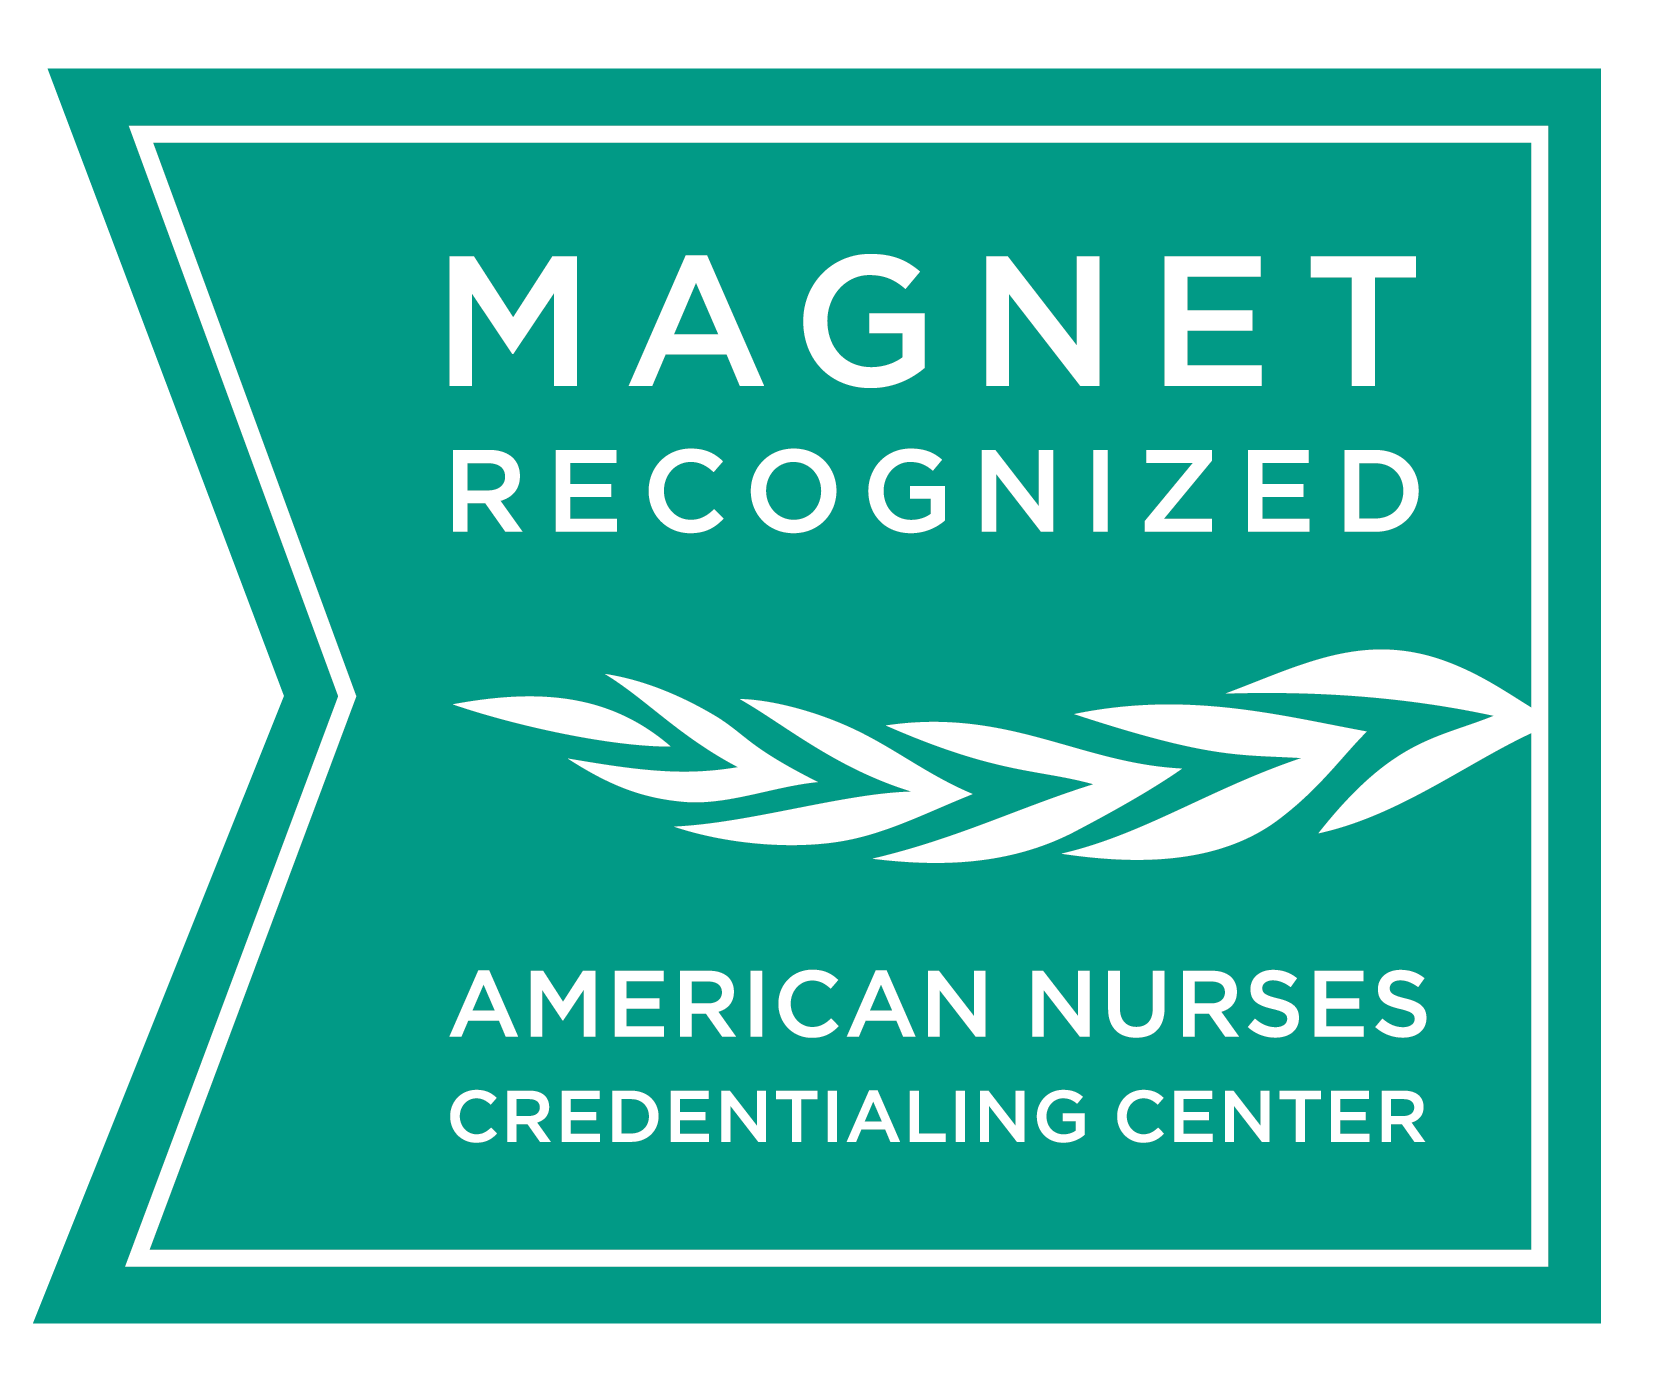 MAGNET recognized award logo